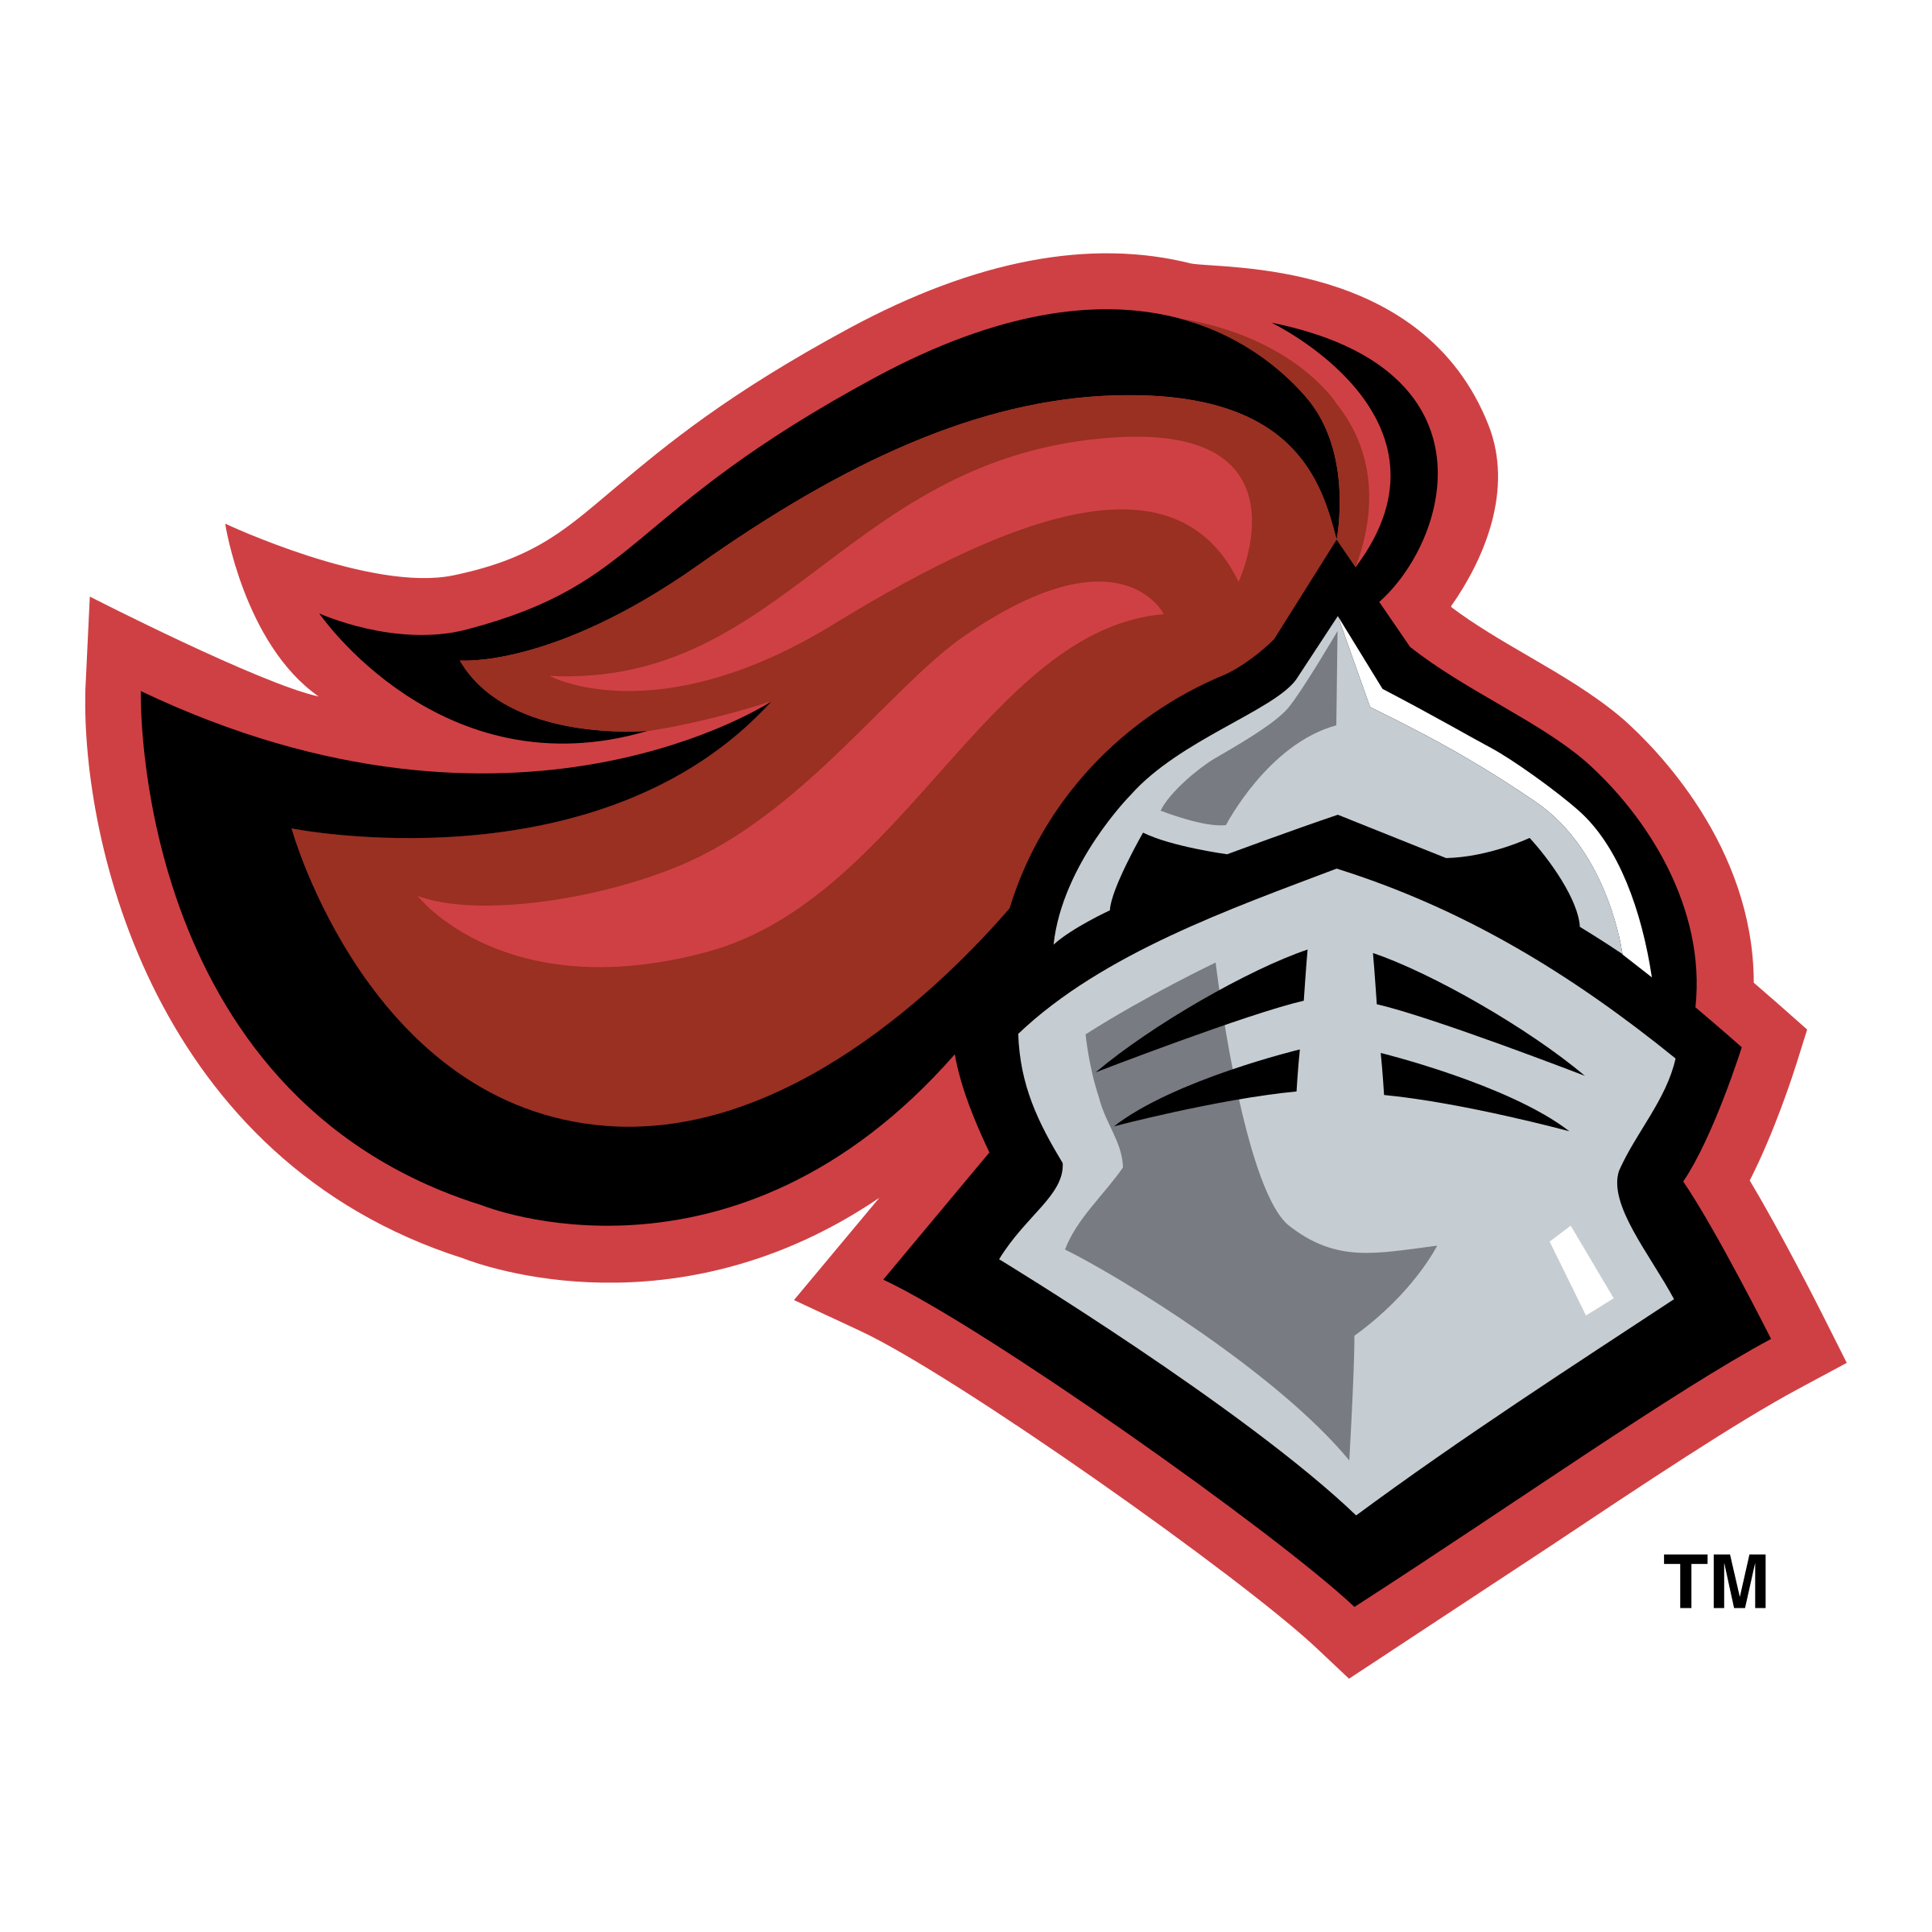 Rutgers Logo - Rutgers Scarlet Knights Logo PNG Transparent & SVG Vector - Freebie ...